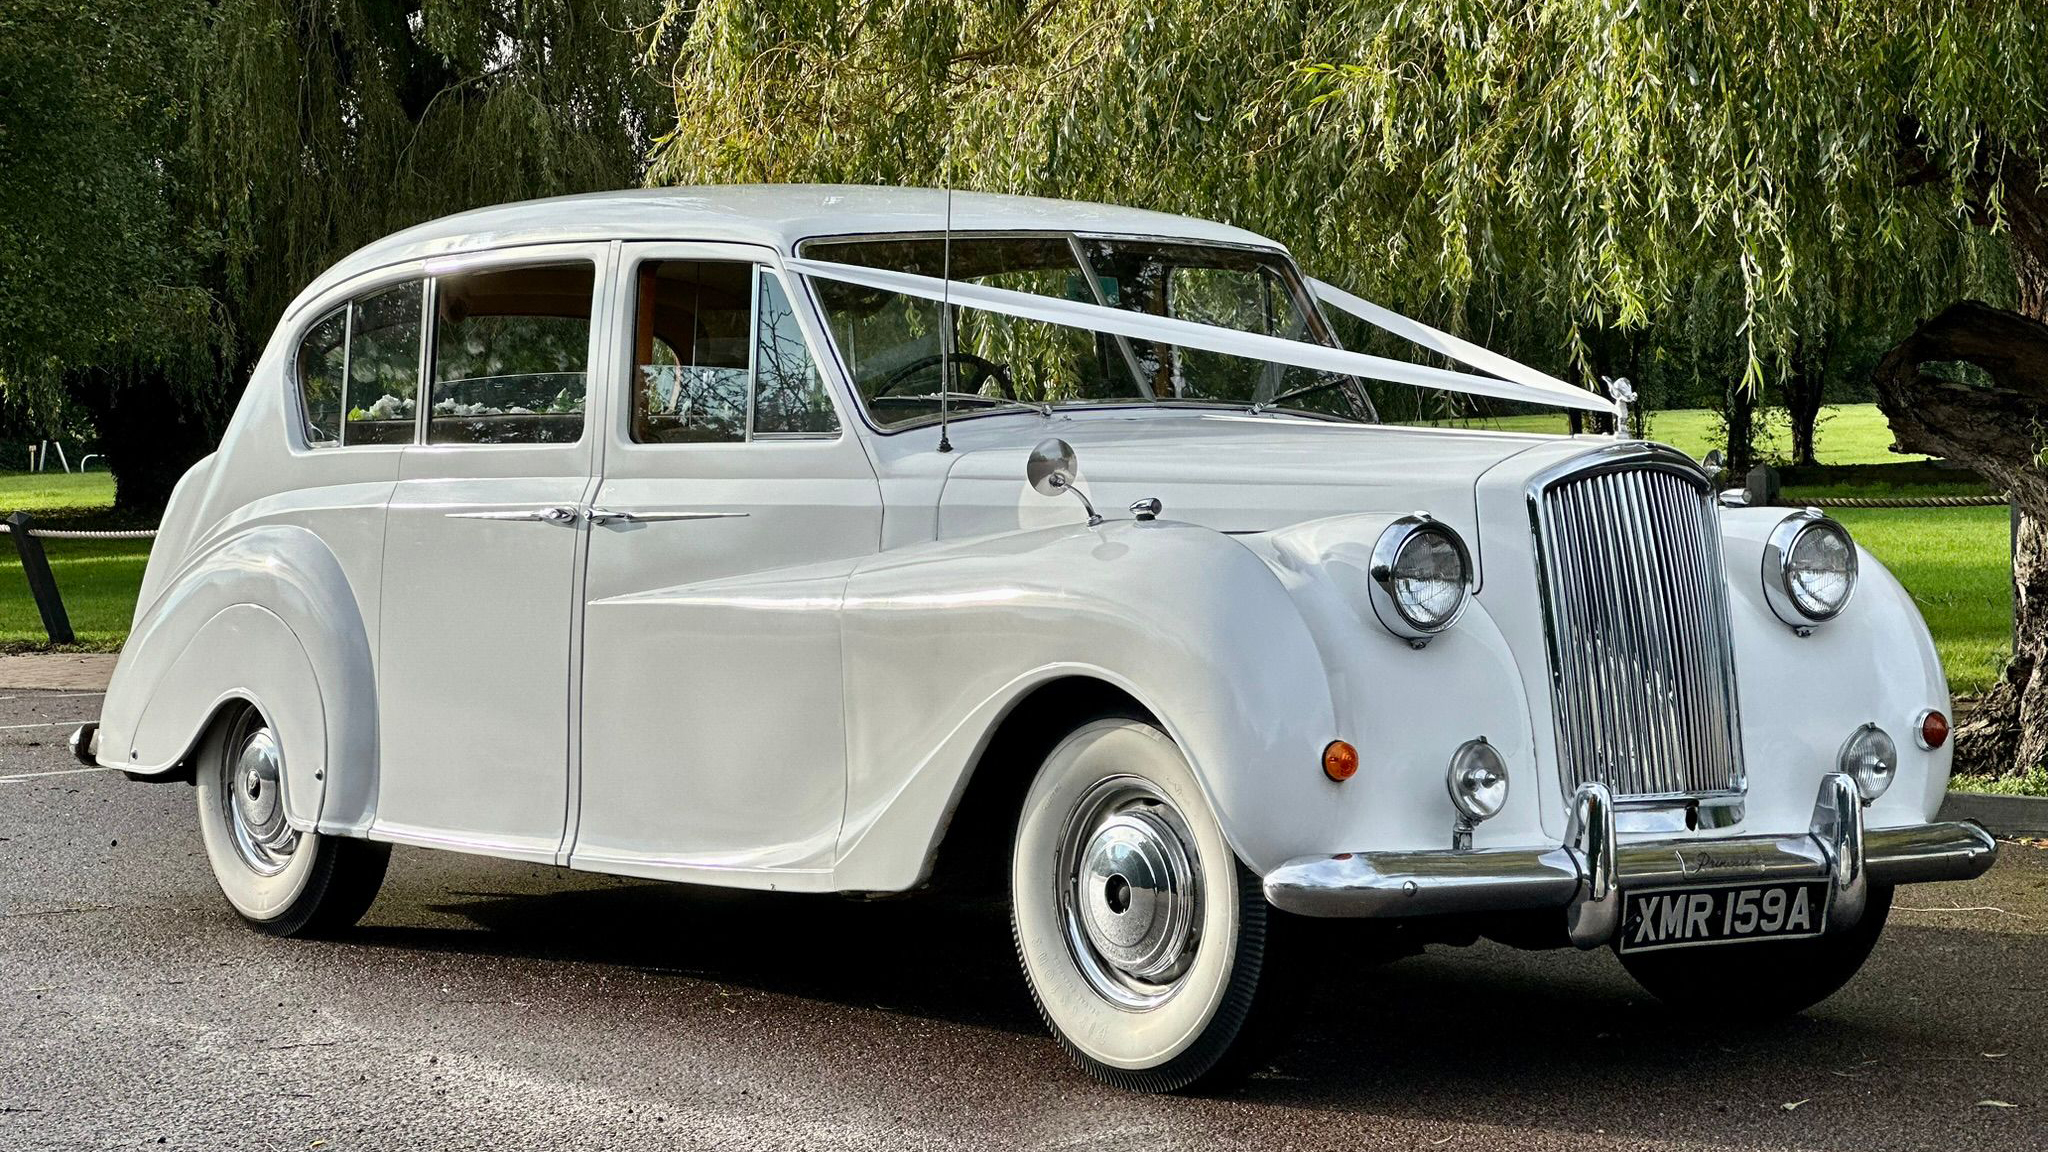 Austin Princess Limousine wedding car for hire in Ilford, London